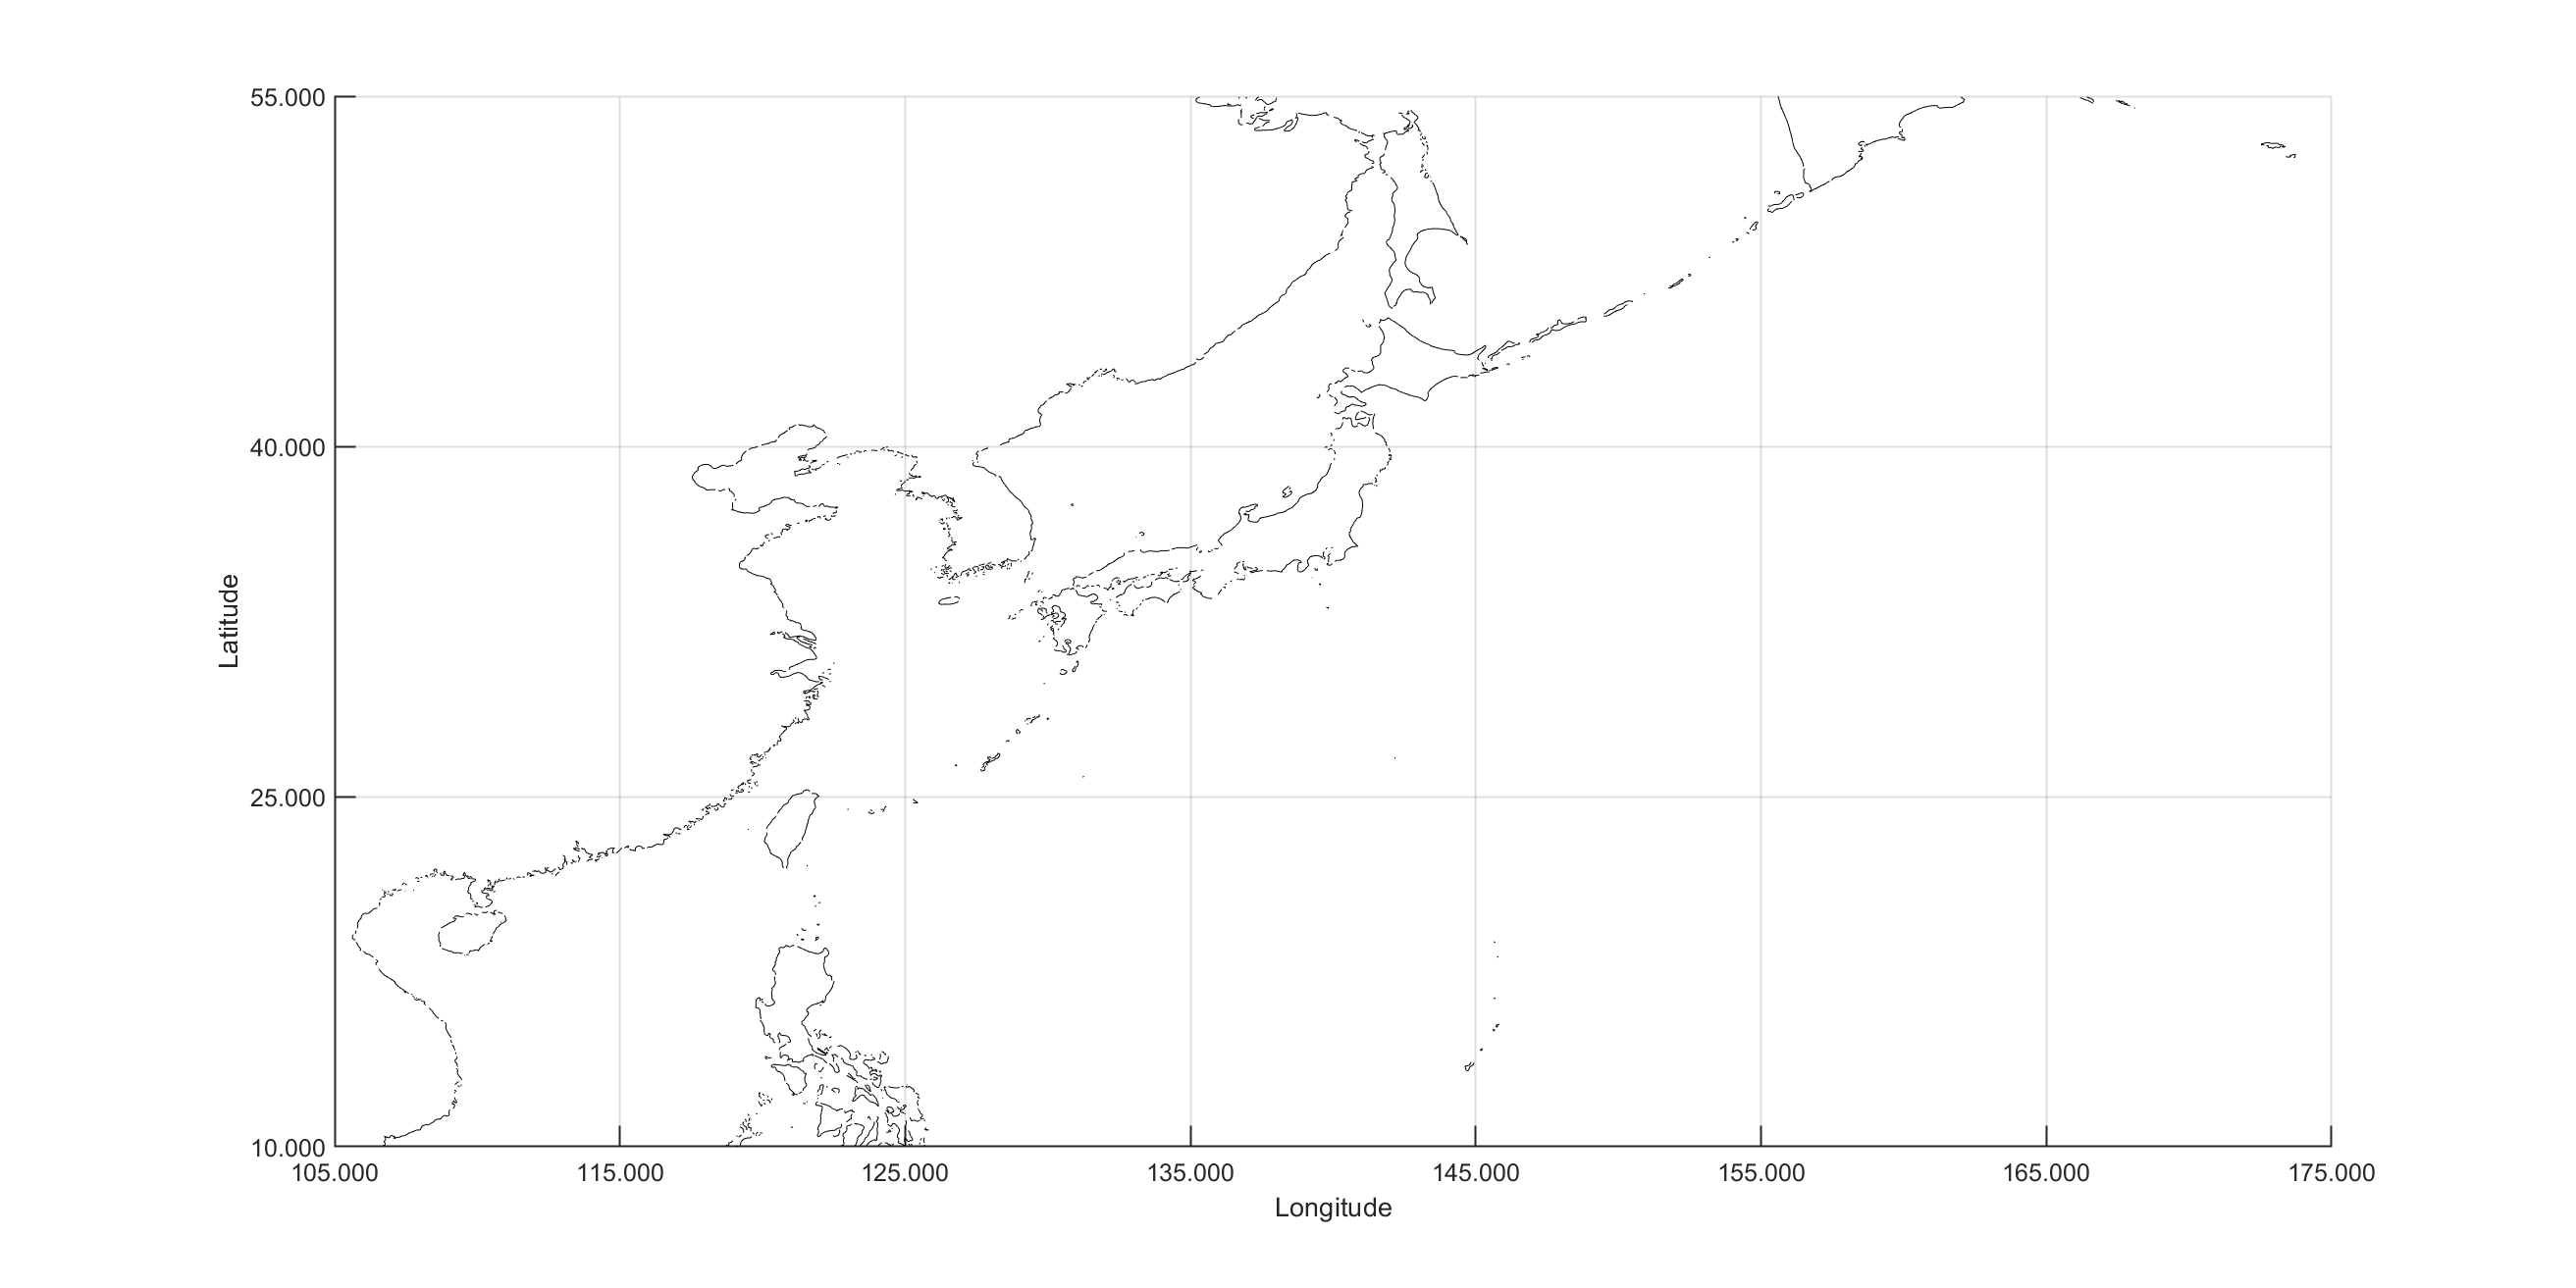 CYCLE_261 - Japan Ascending passes